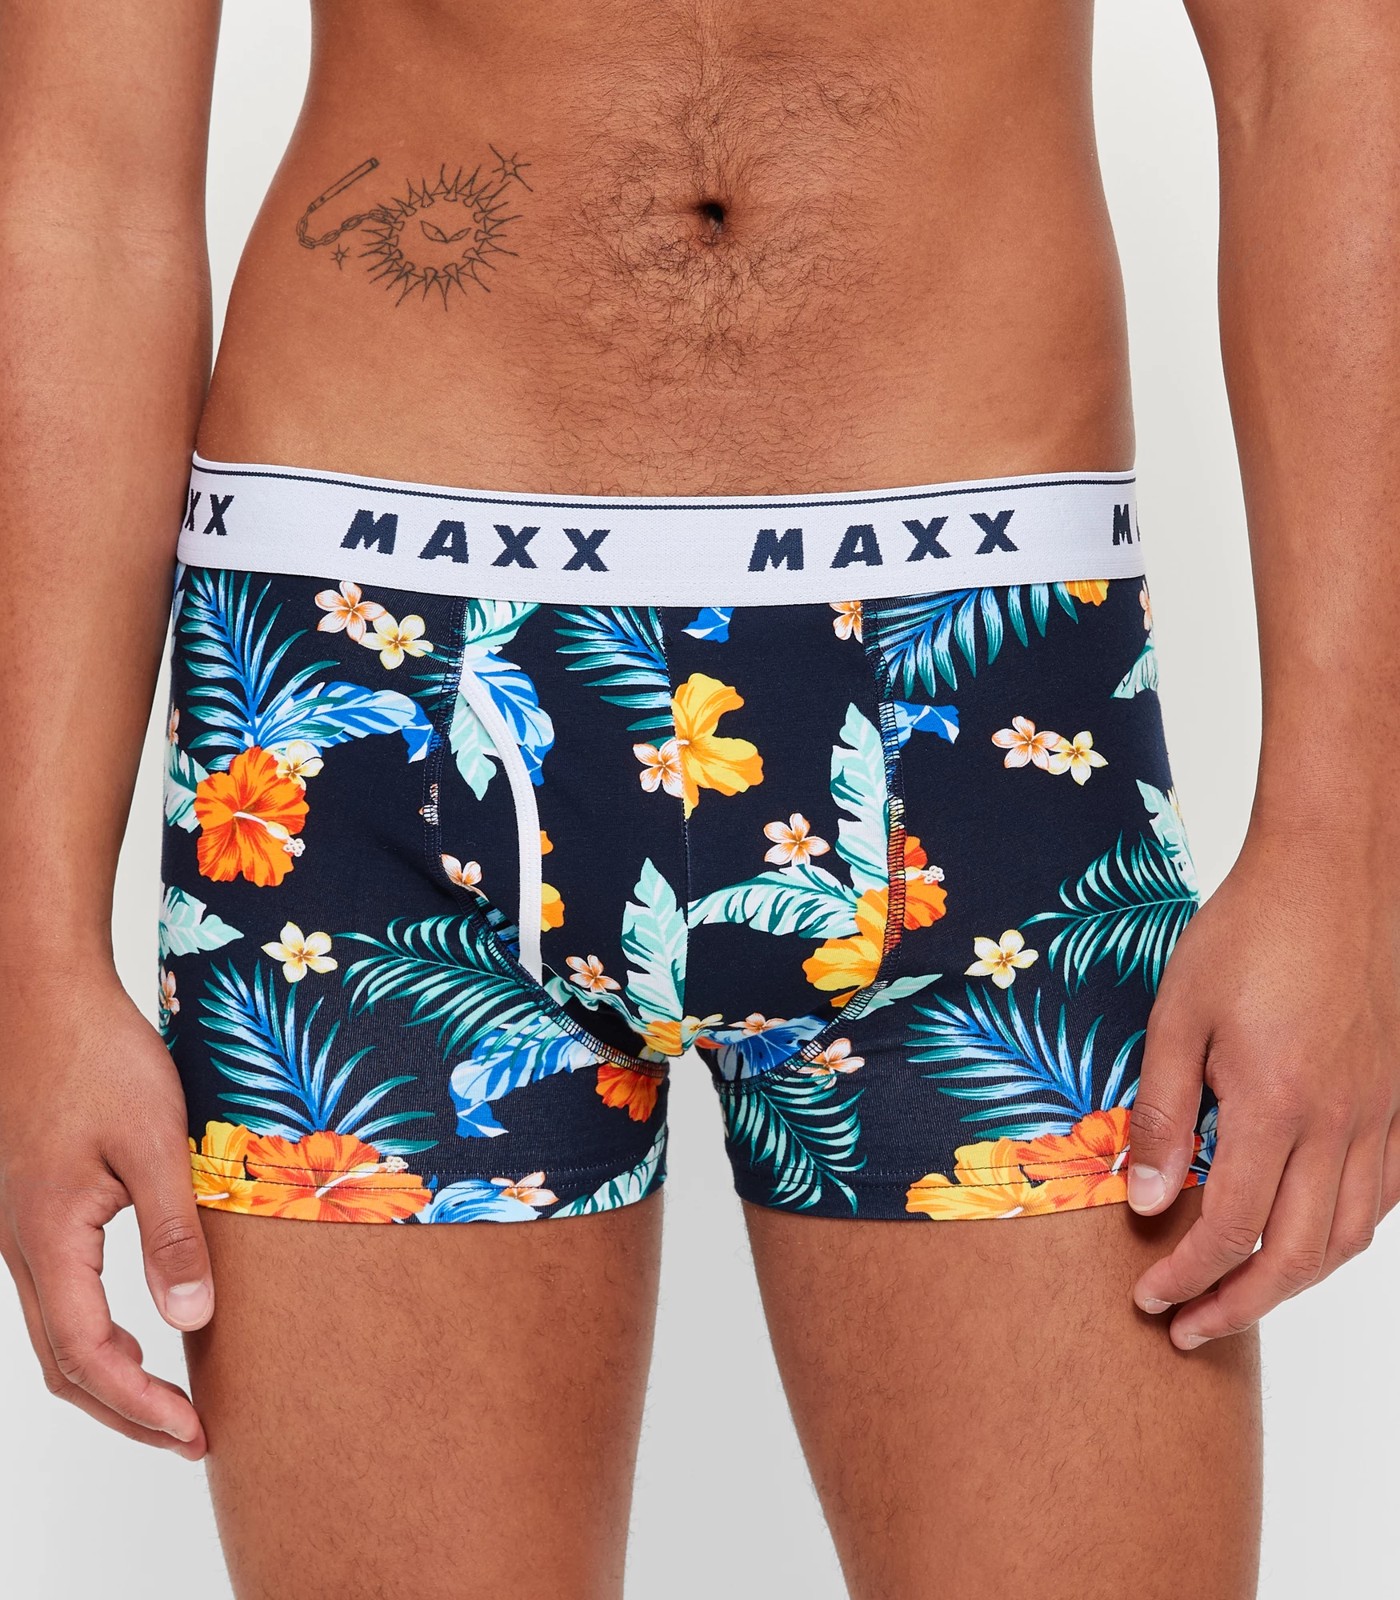 Maxx Flyfront Trunks - Floral Print